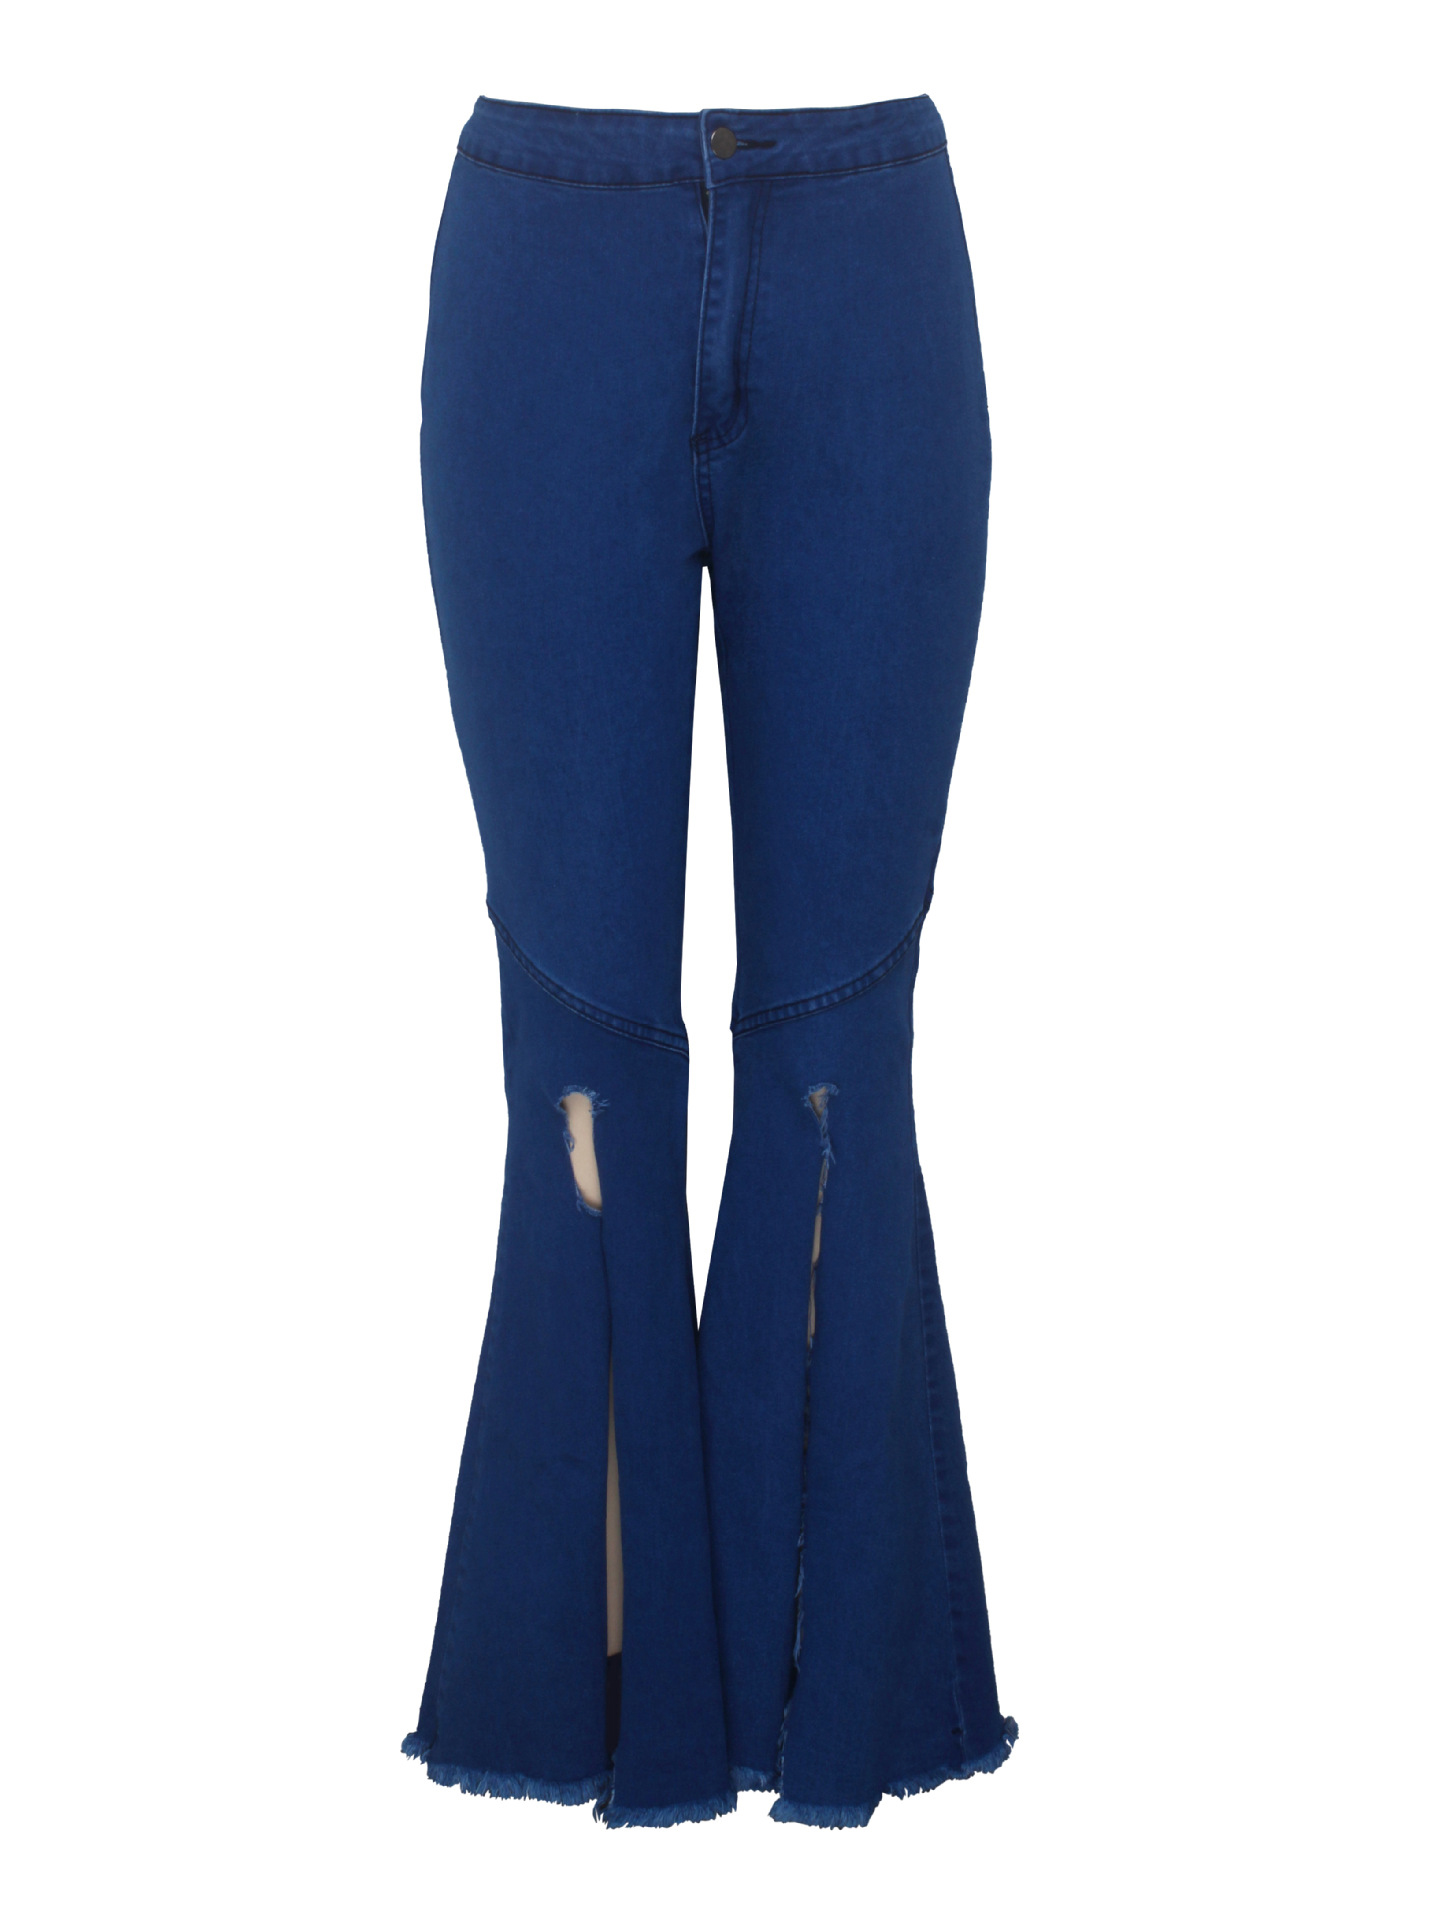 Chic Dark Blue Split Bottom Trendy Flare Jeans